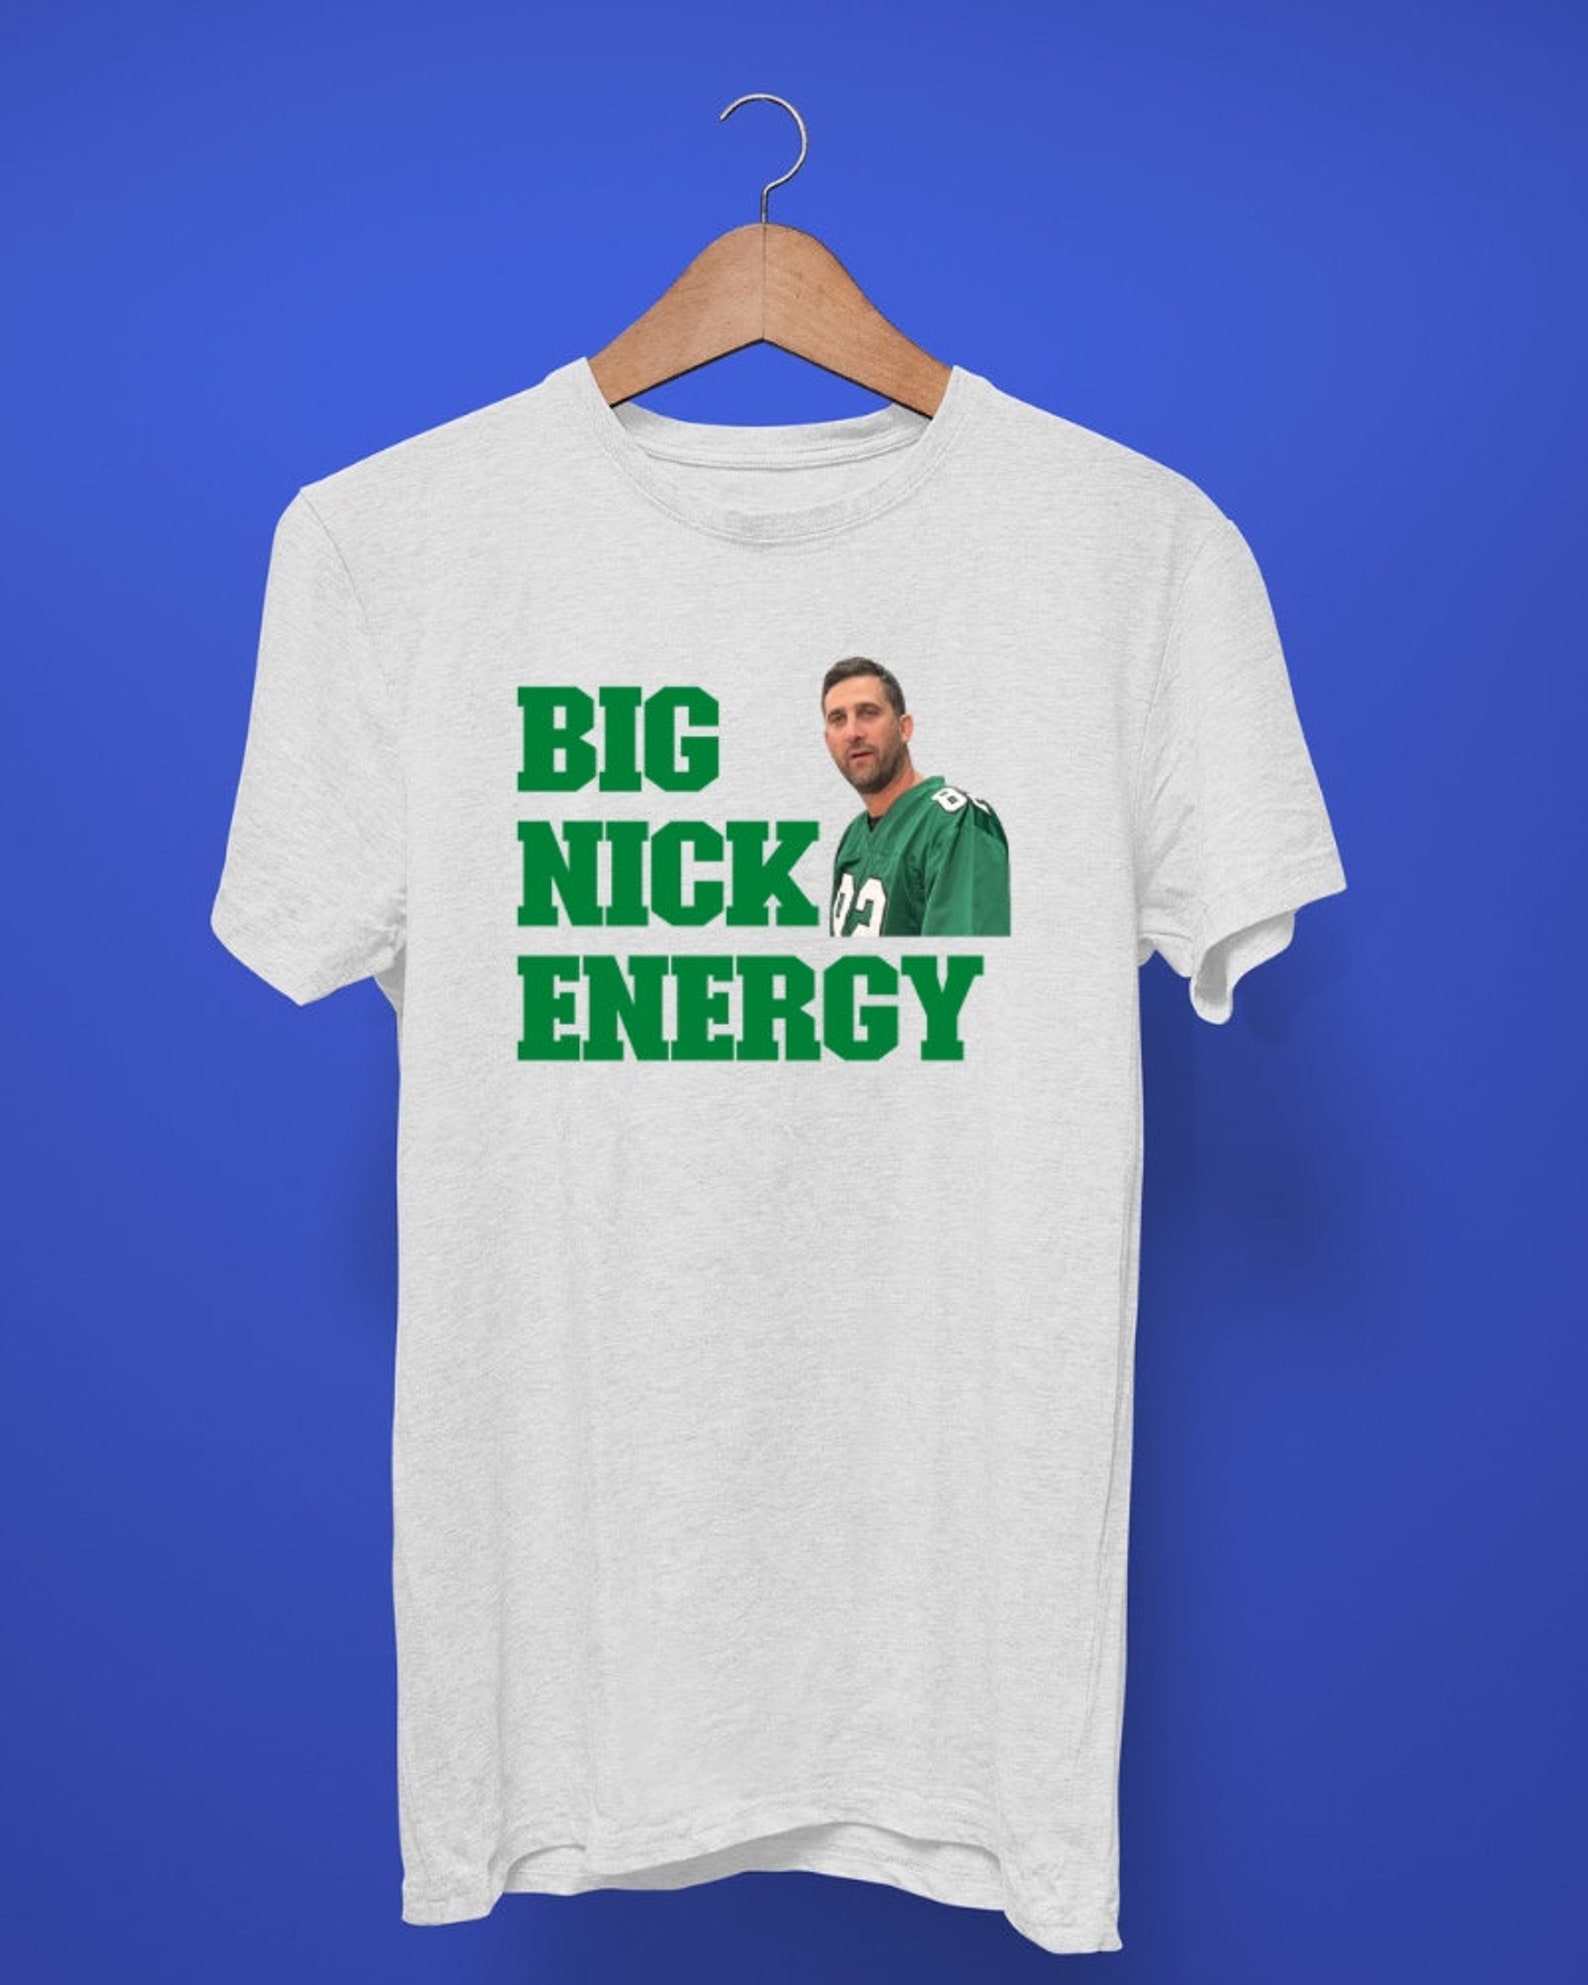 RoeBot on X: BIG NICK ENERGY funny philadelphia eagles shirt #gift  #Philadelphia #Eagles #funny #shirt #BigNickEnergy #LilNitwits #  👉  / X